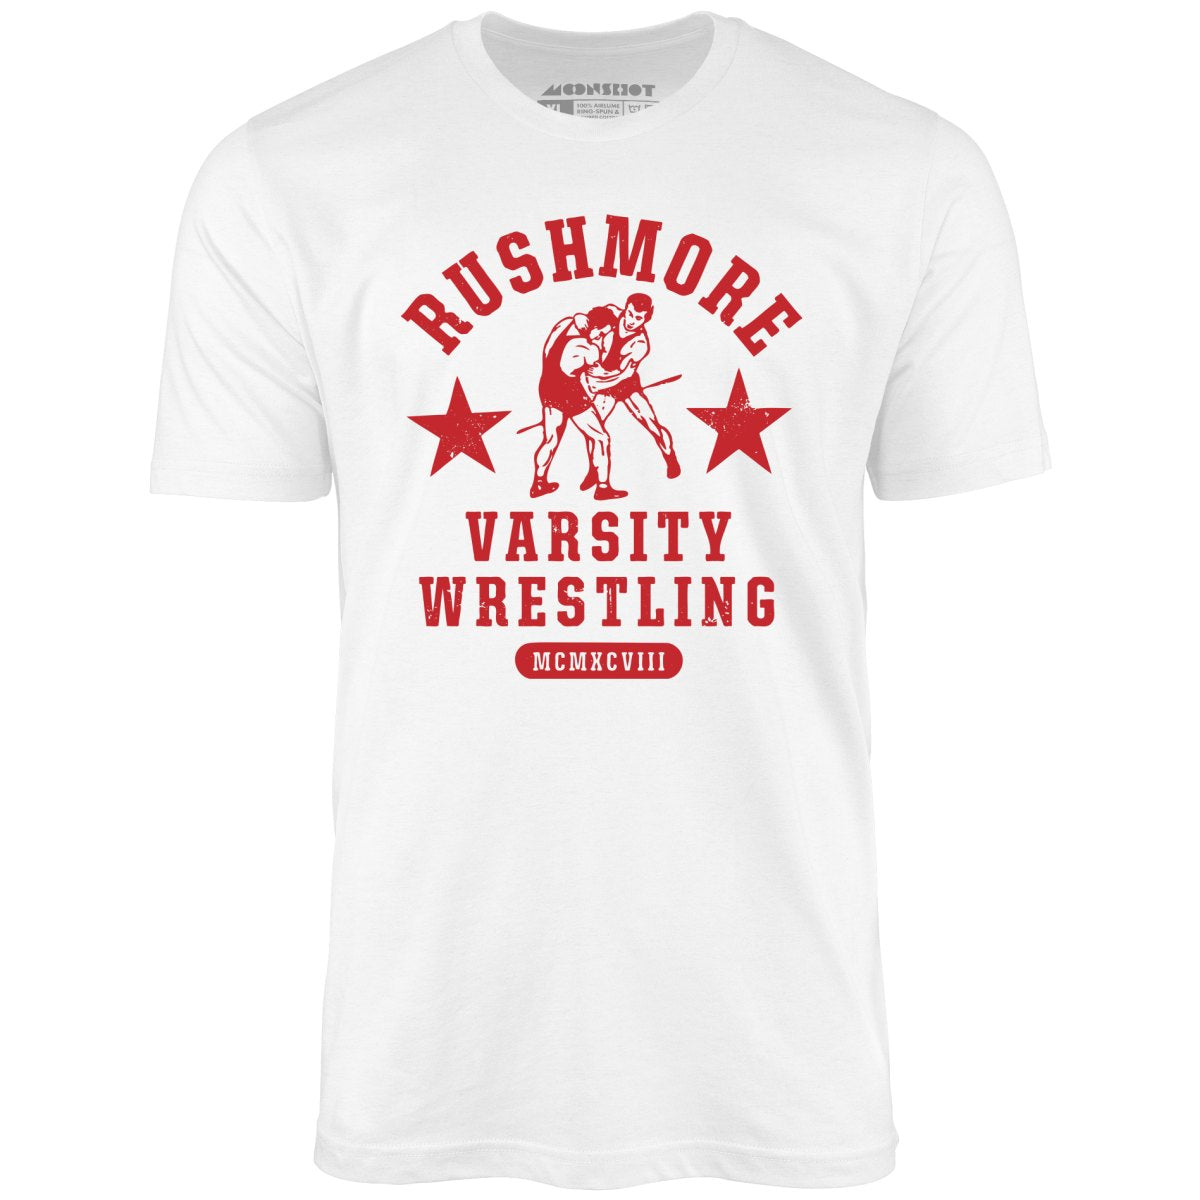 Rushmore Varsity Wrestling - Unisex T-Shirt